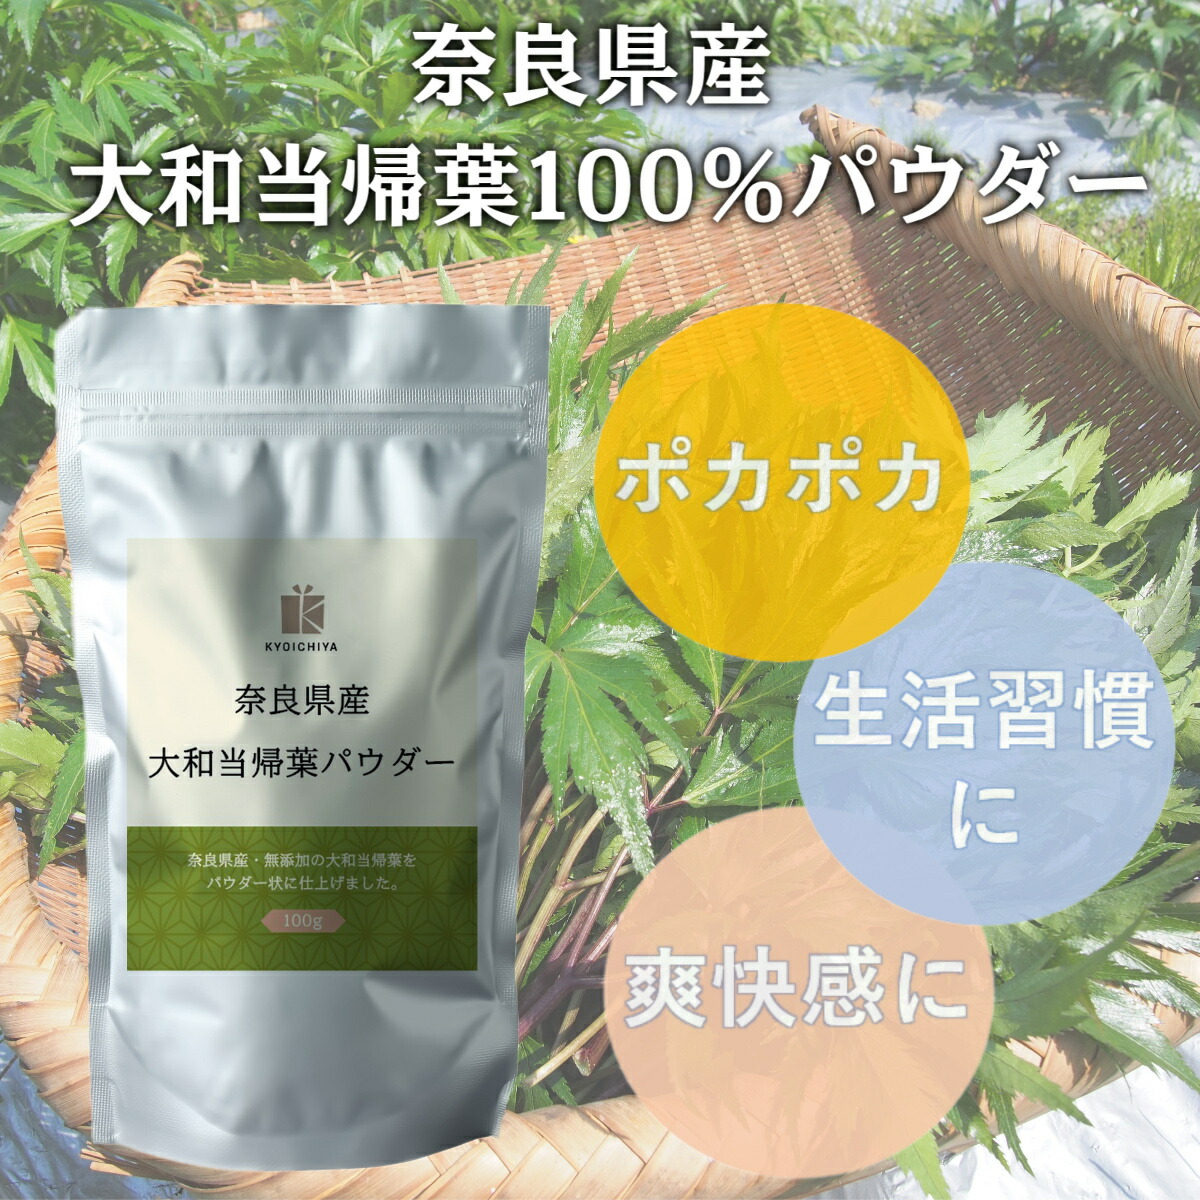  Yamato present . leaf no addition powder 100g ×3 sack set Nara prefecture production domestic production Yamato present . vitamin supplement nutrition assistance food 